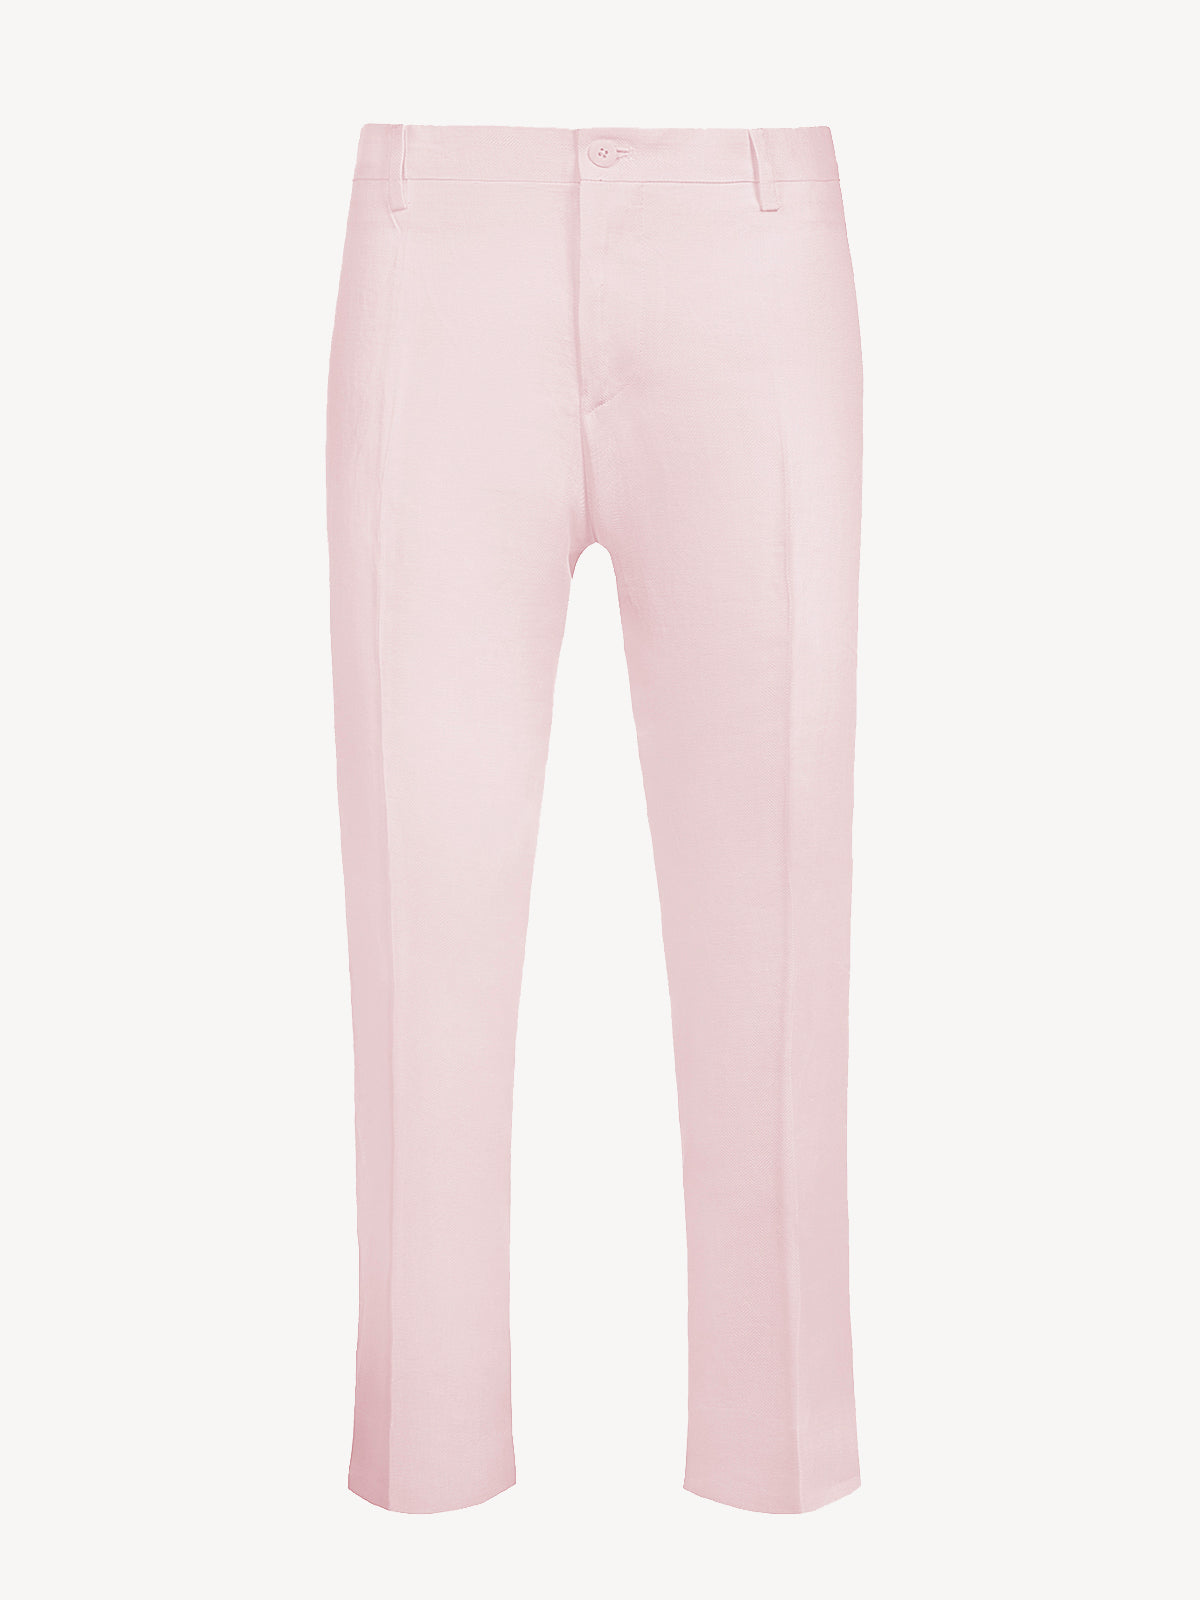 Pantalone New Capri for woman  100% Capri pink linen pant front